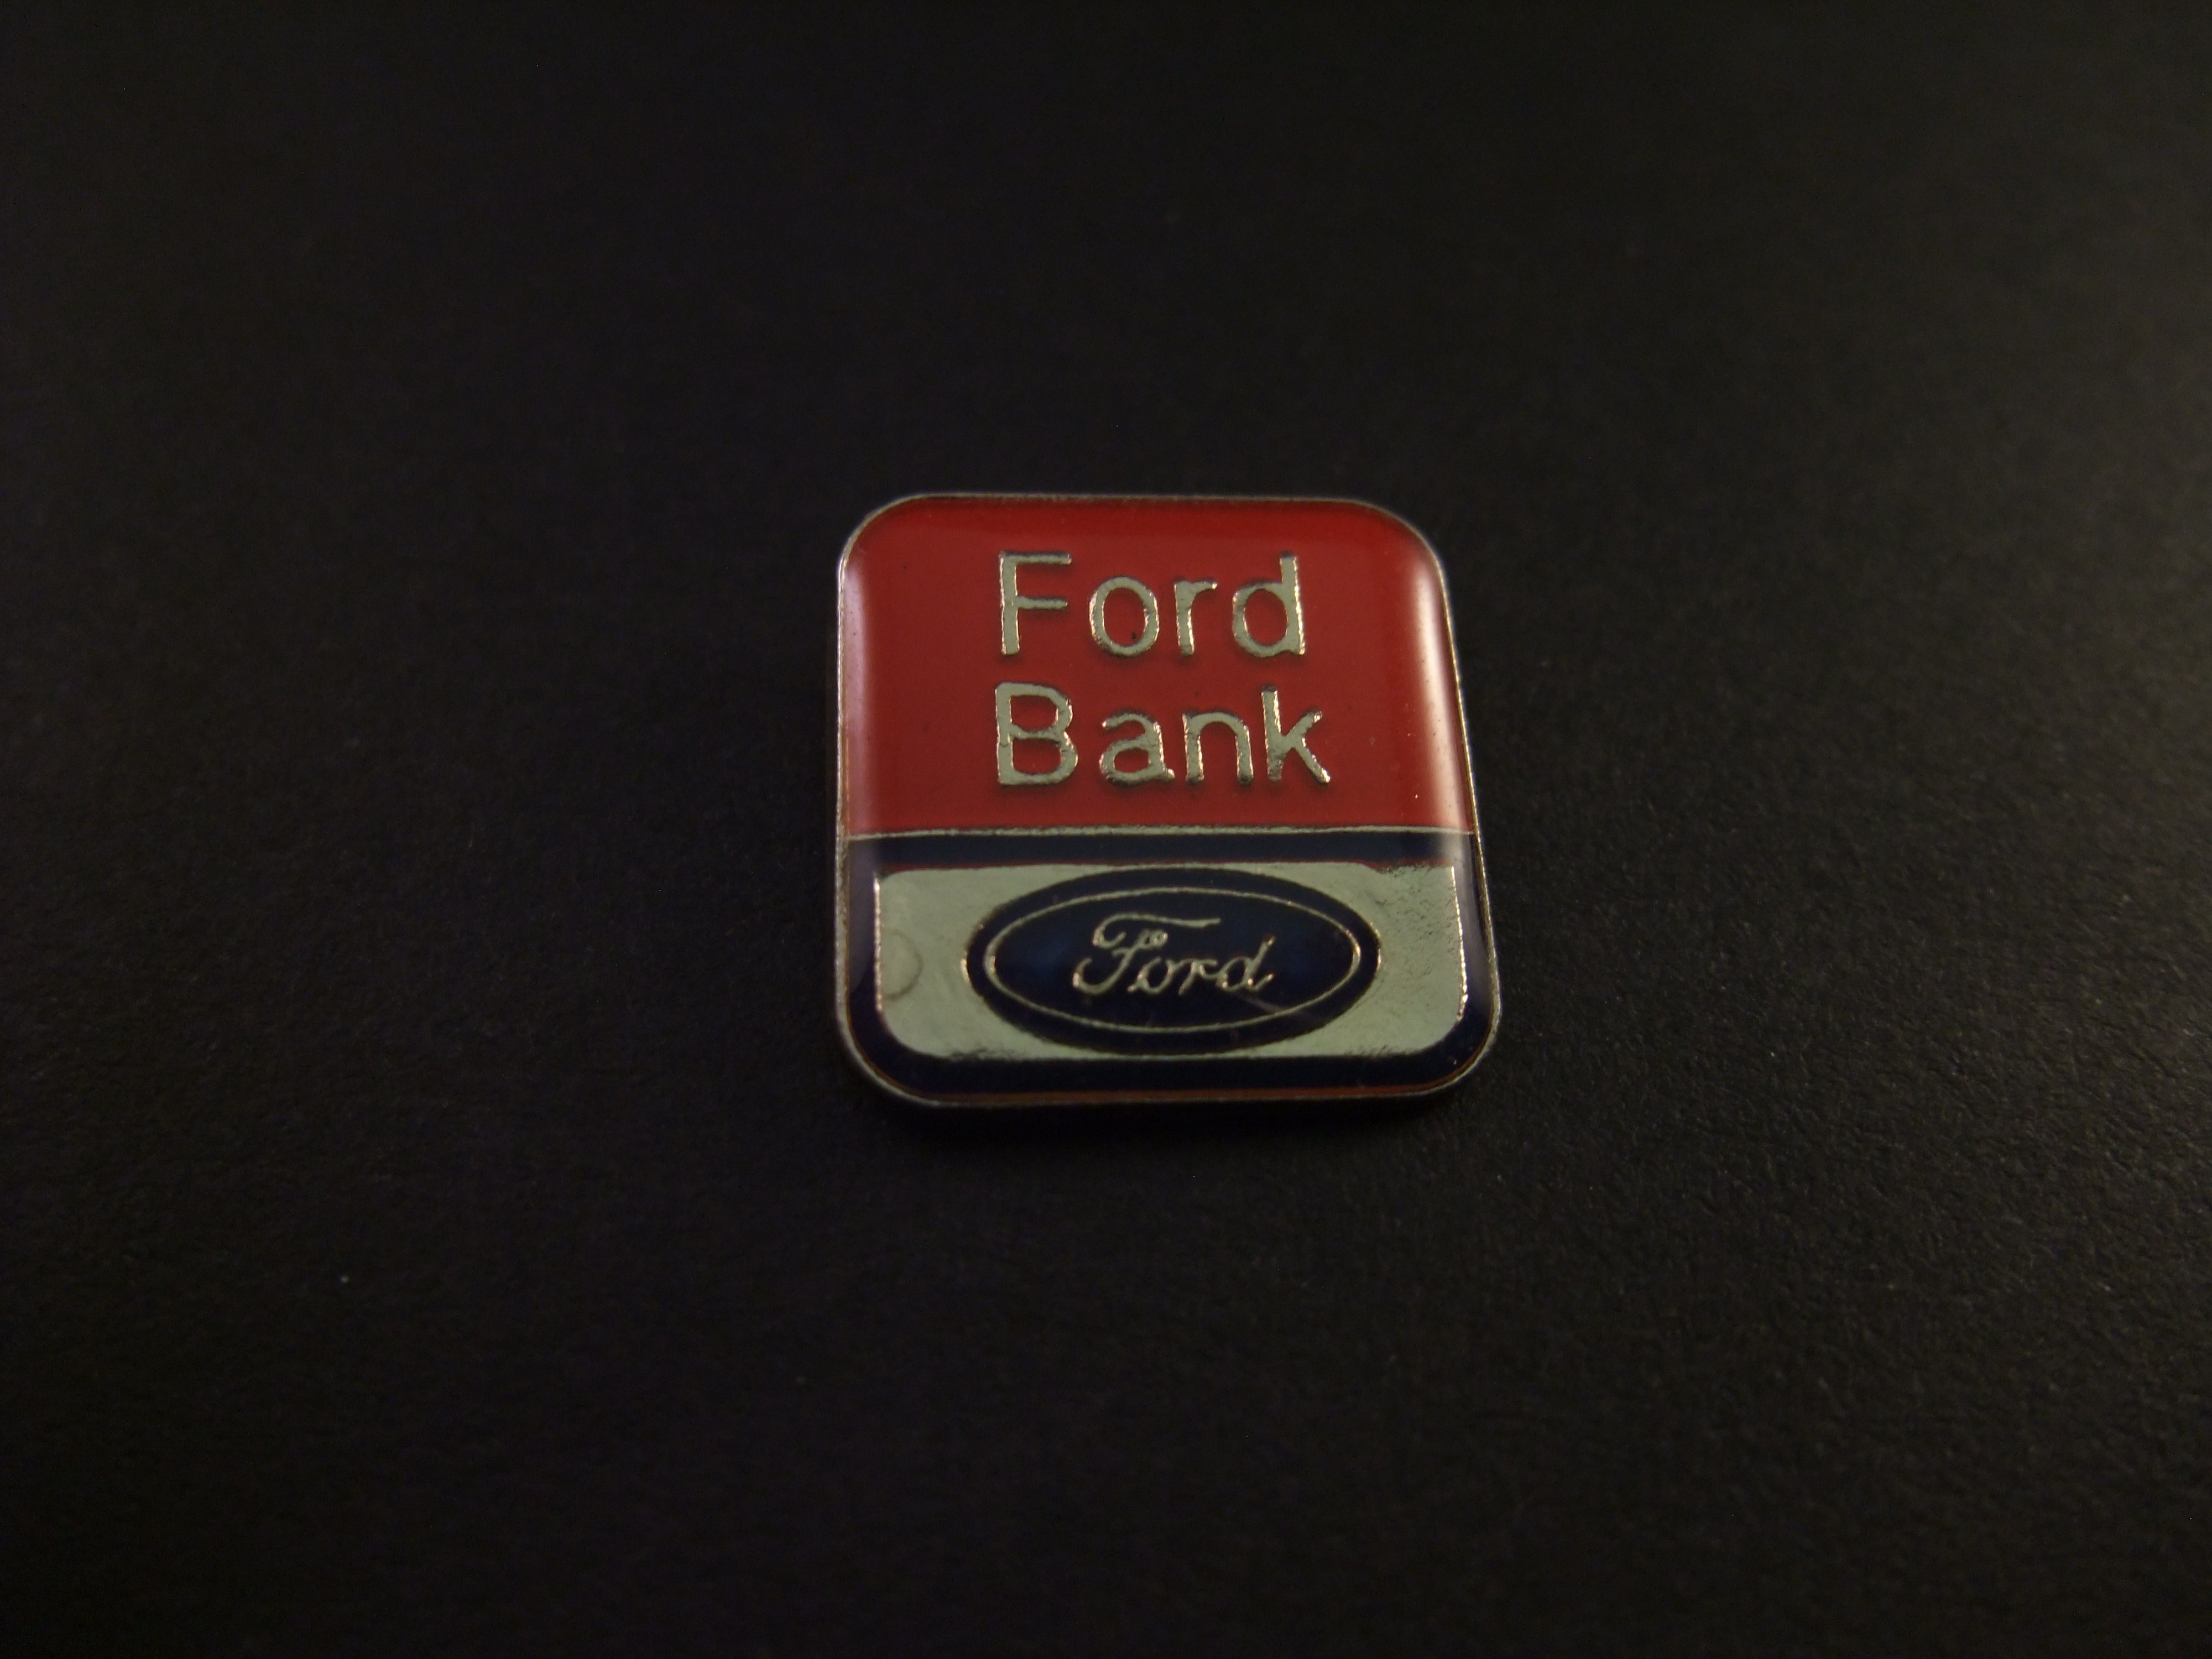 Ford Bank (Ford Credit autofinanciering) logo